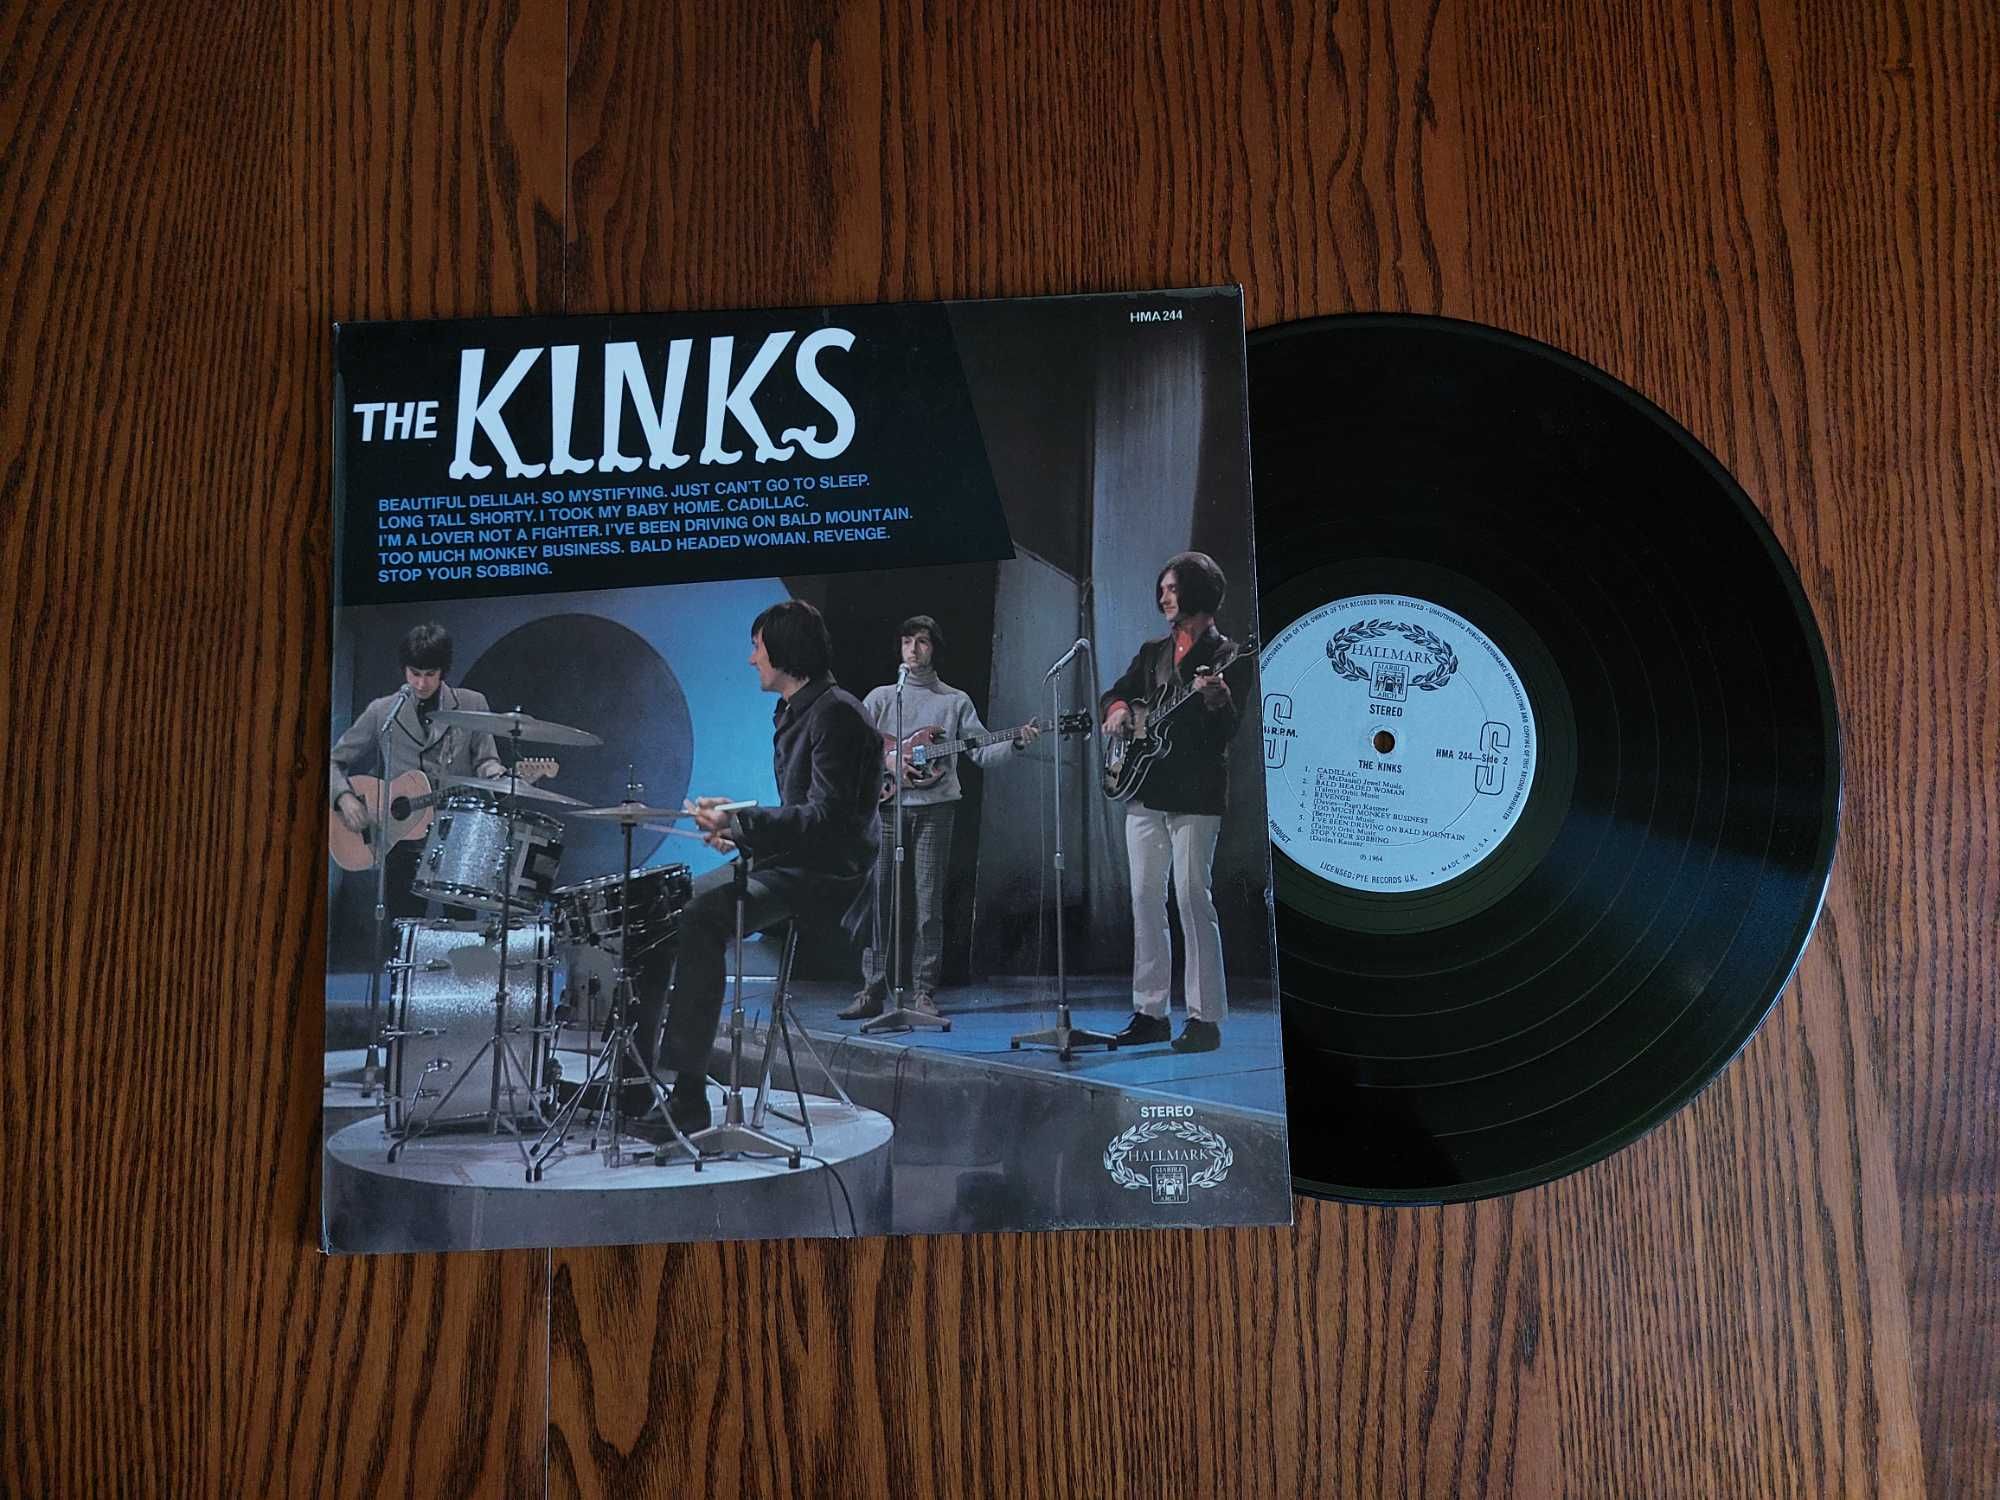 The Kinks – Kinks lp 5206 Press UK